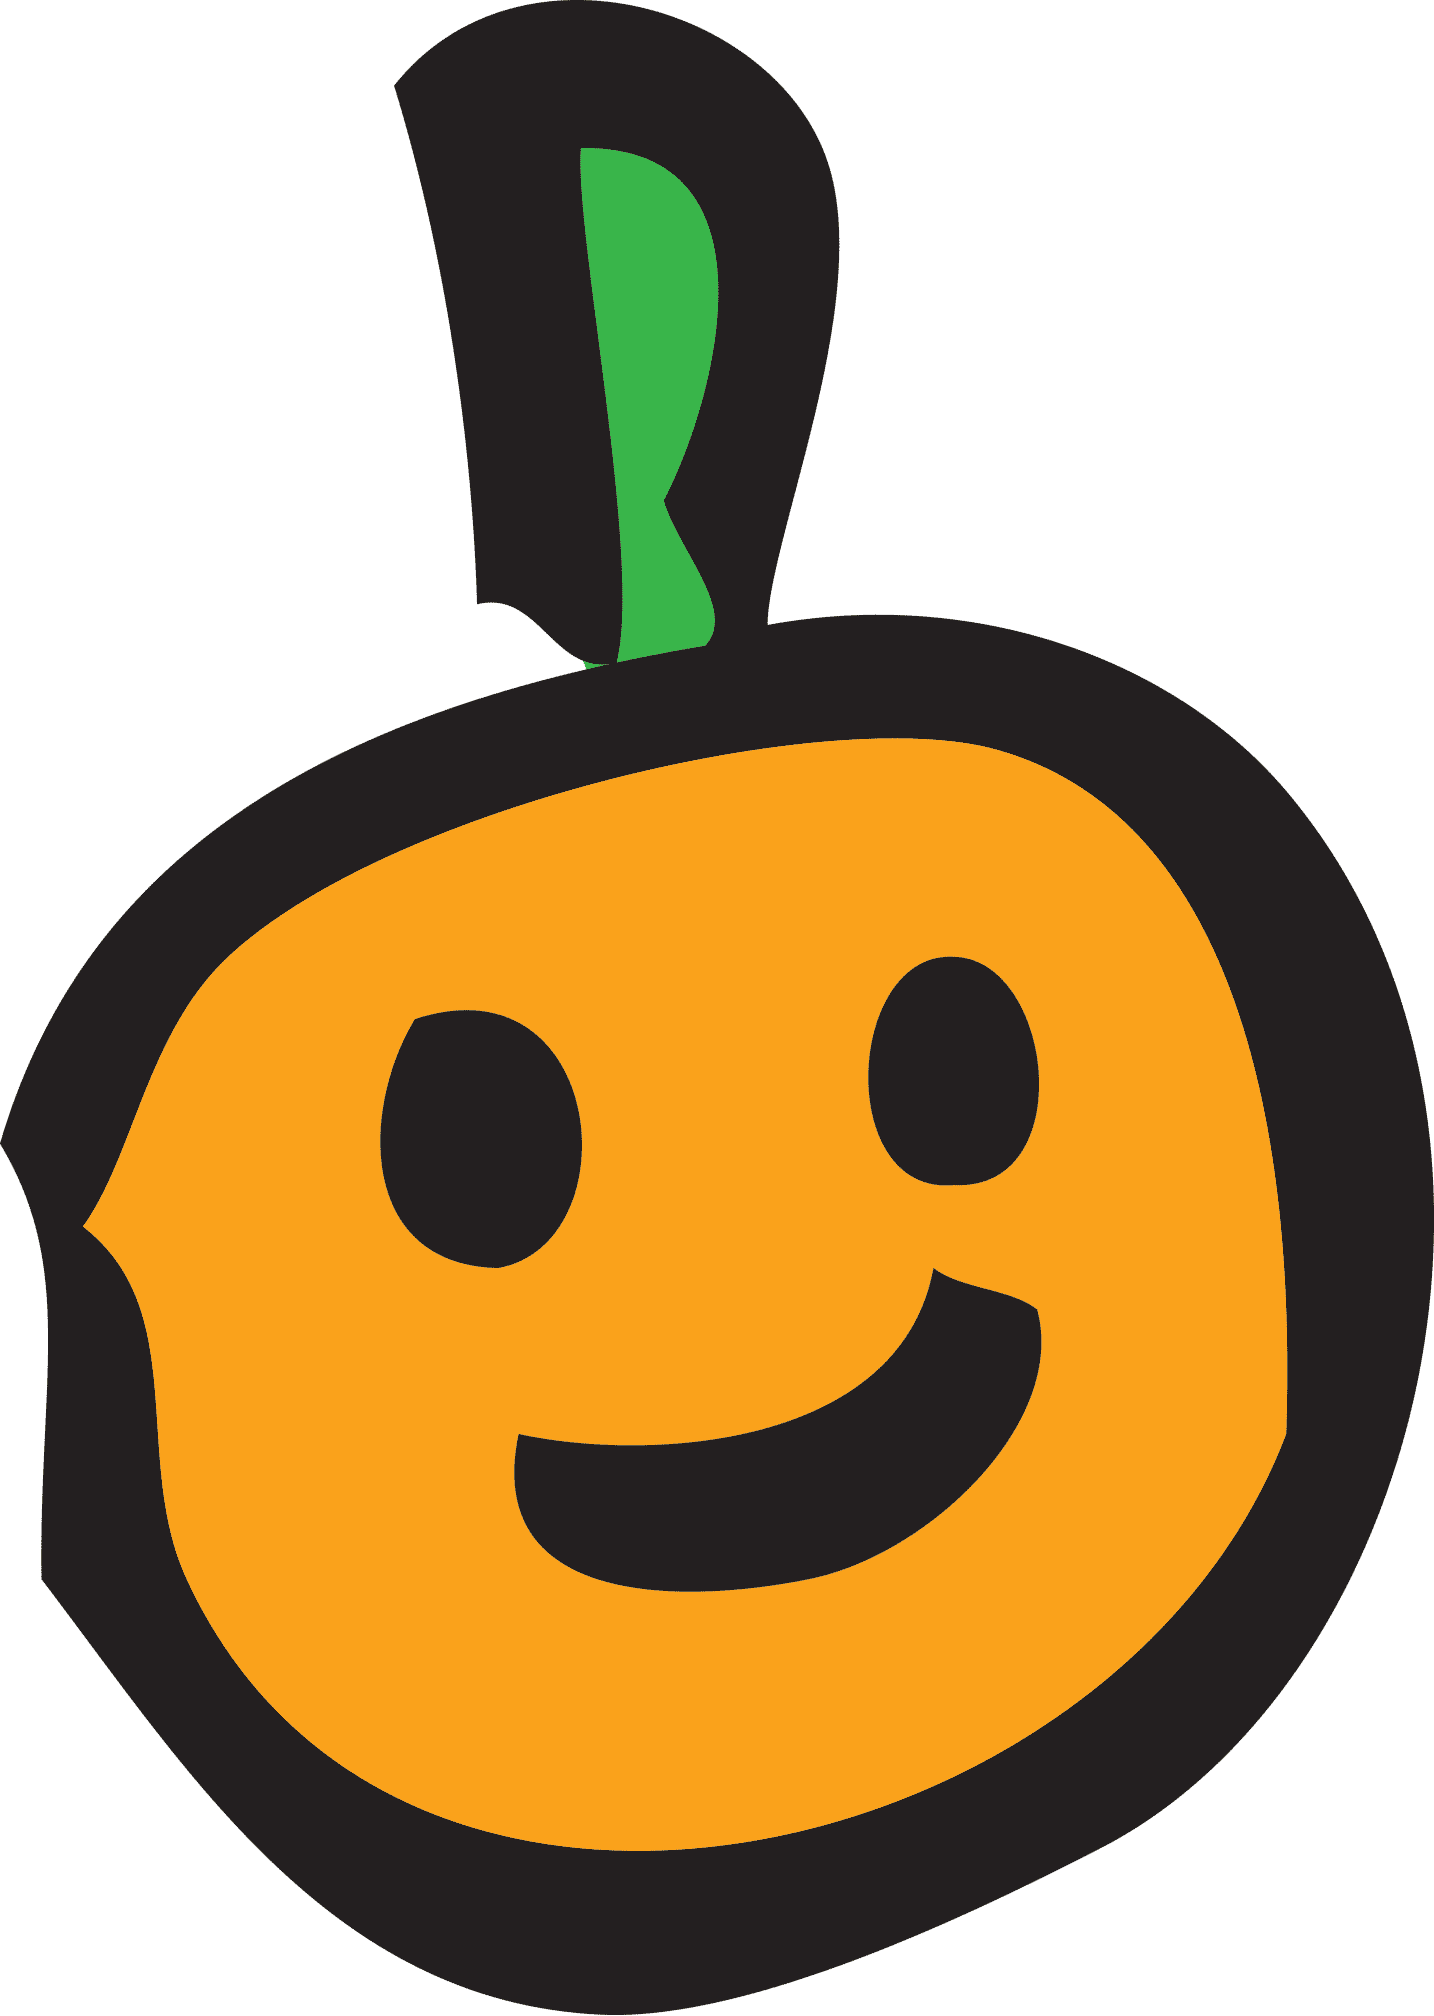 Smiling Cartoon Pumpkin Graphic